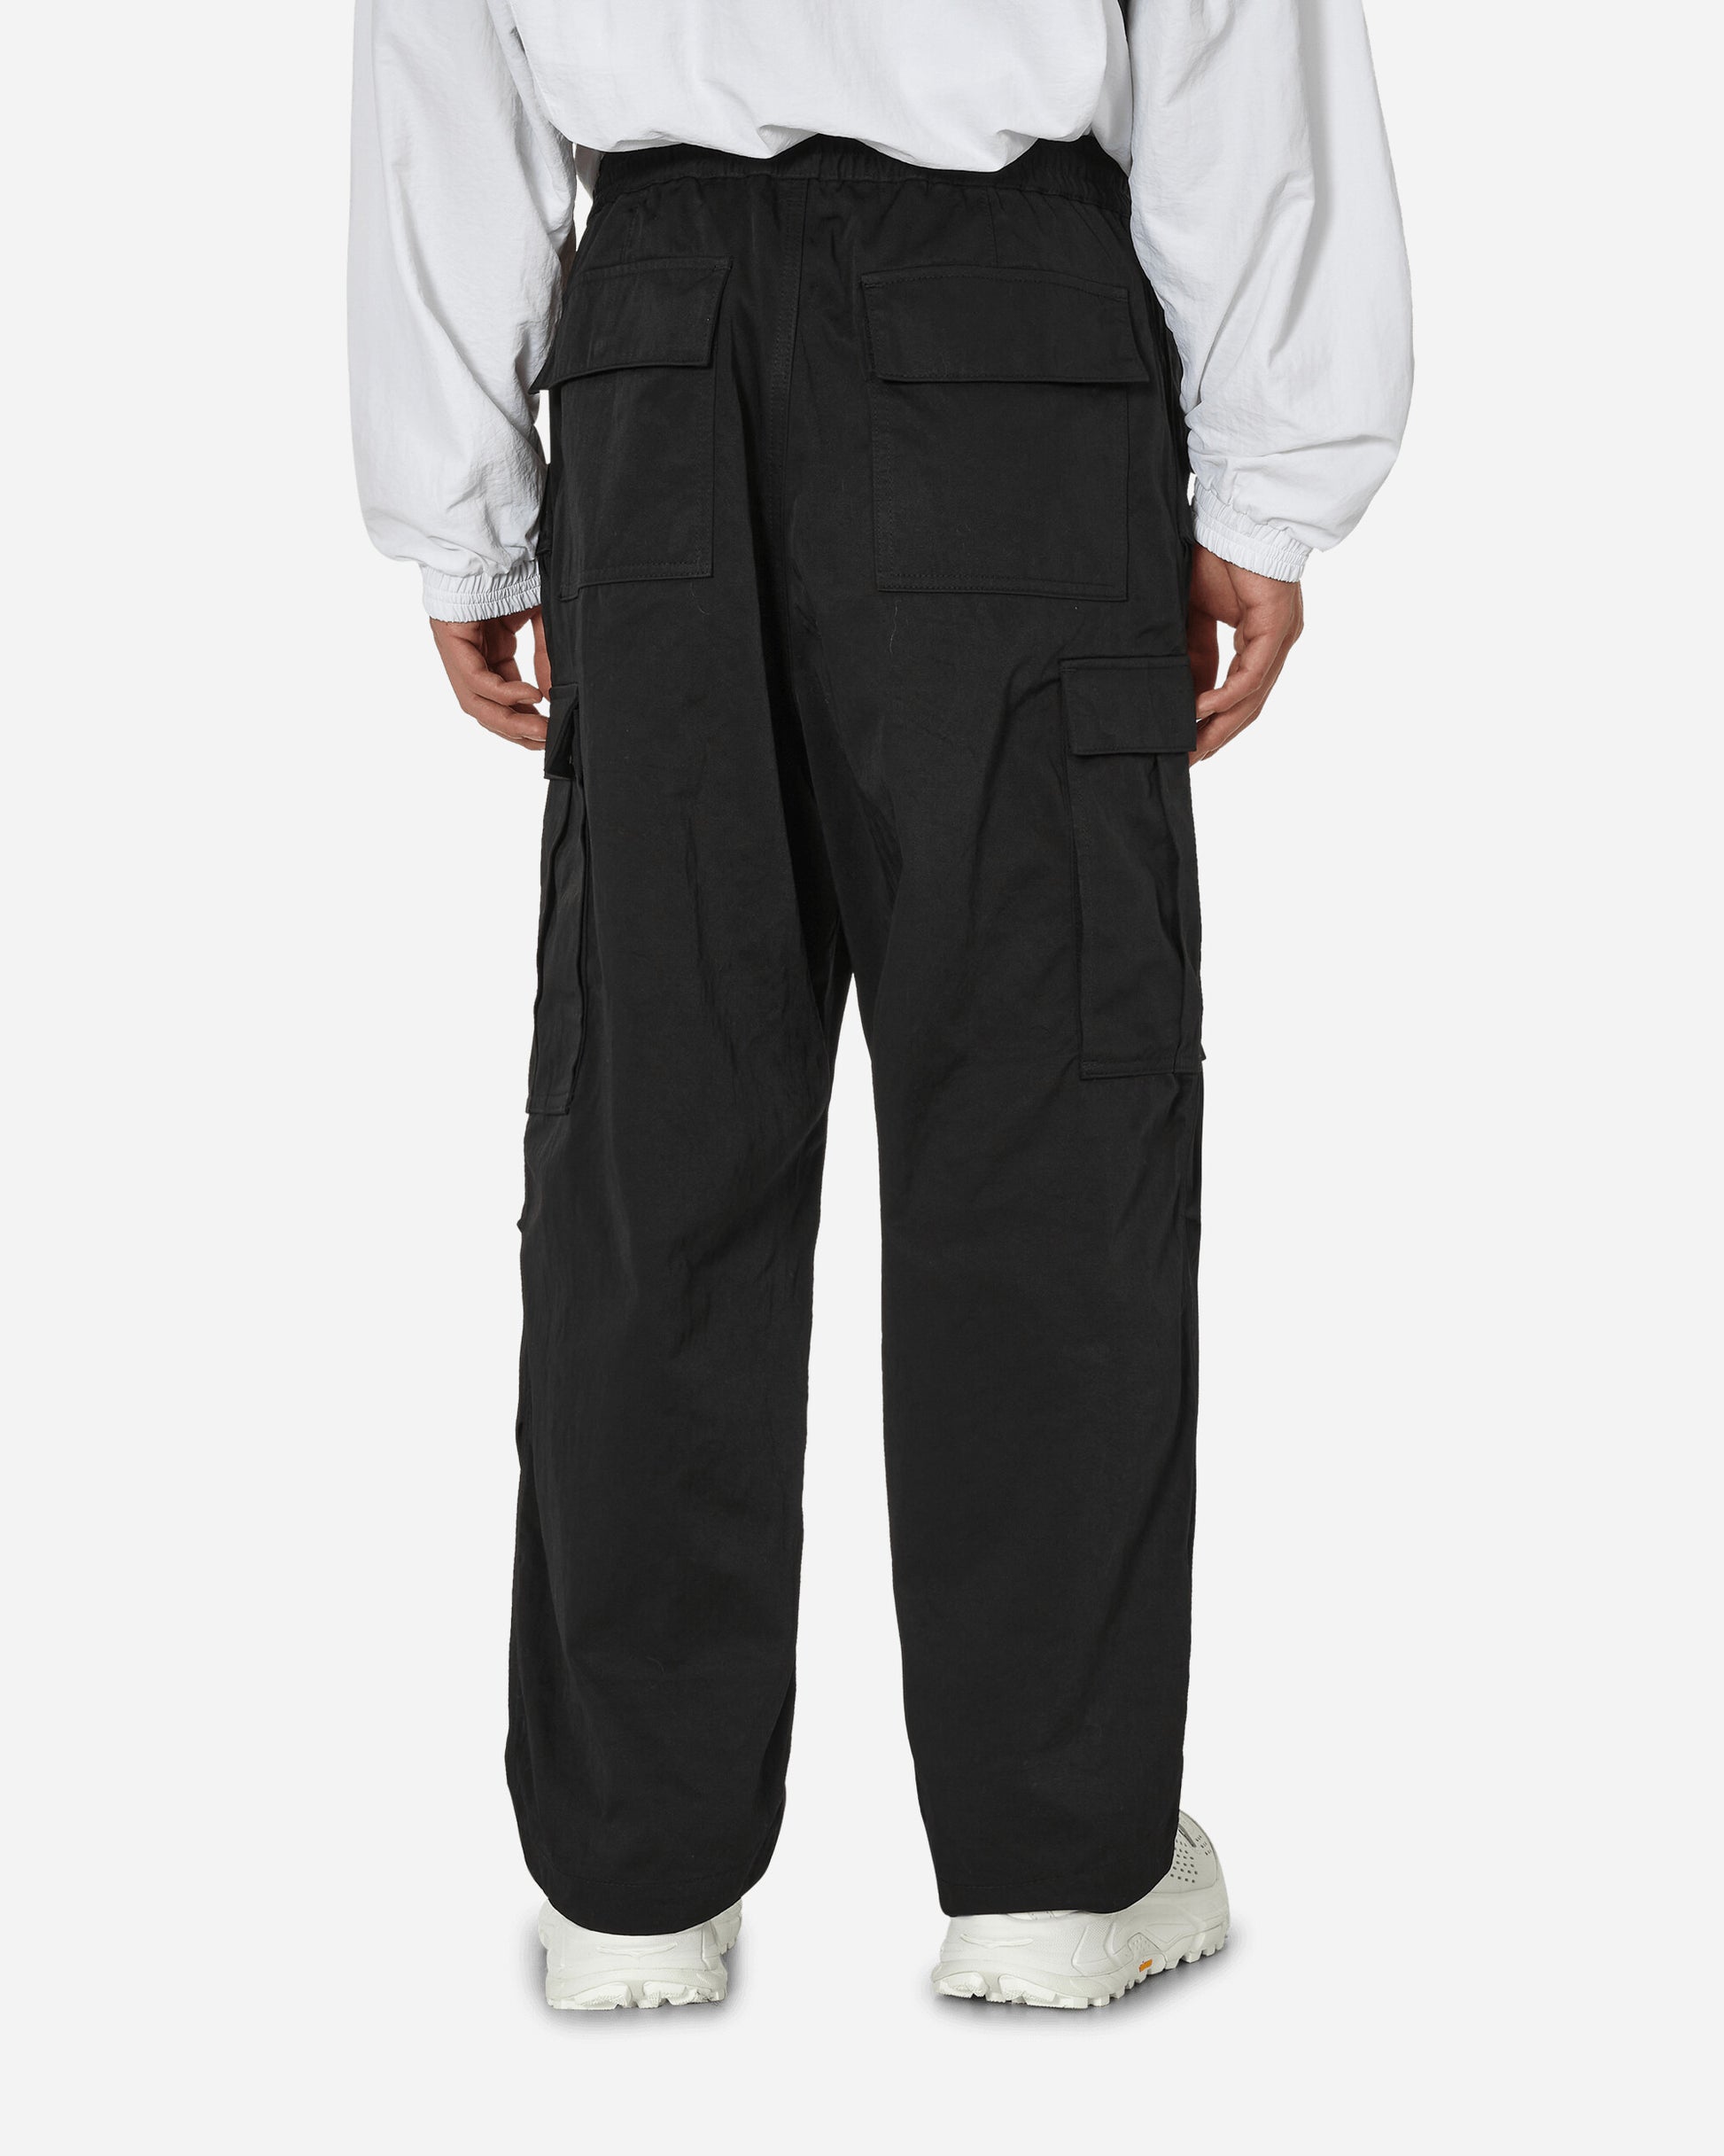 Junya Watanabe MAN Men'S Pant Black Pants Trousers WL-P046-W23 1